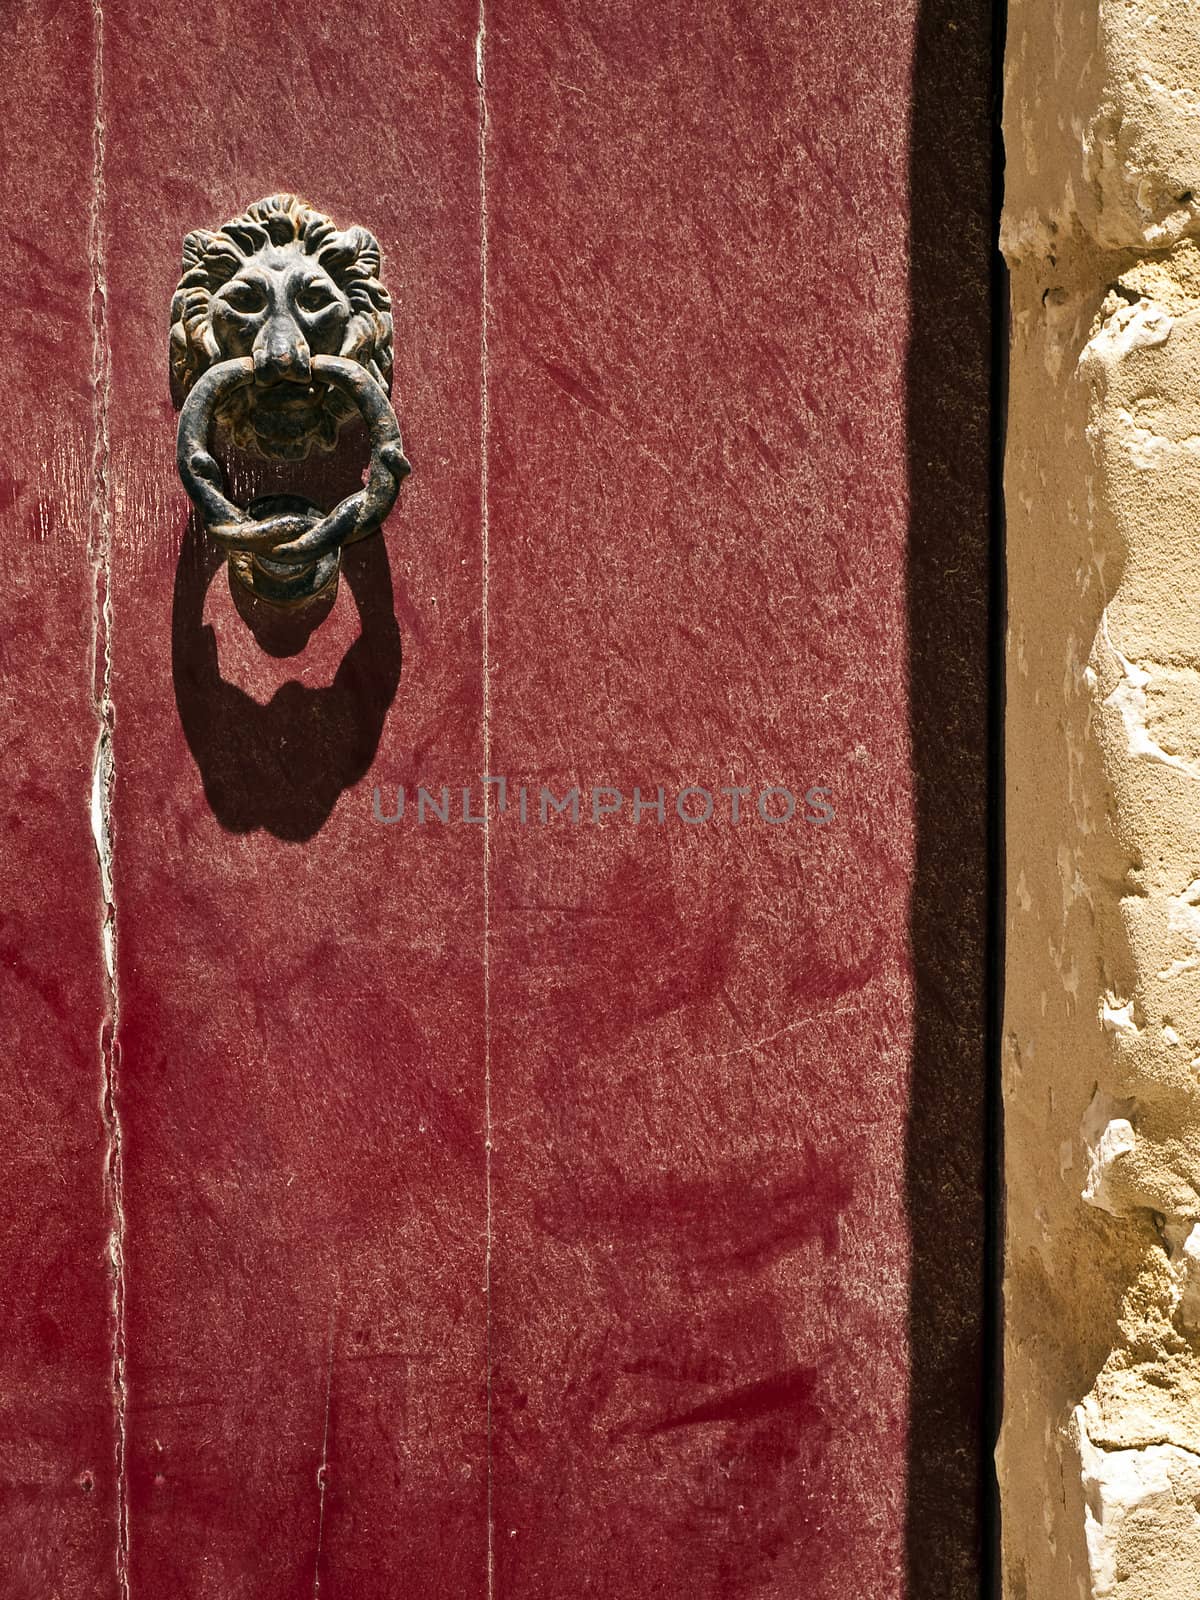 Medieval door knocker in the old city of Mdina in Malta